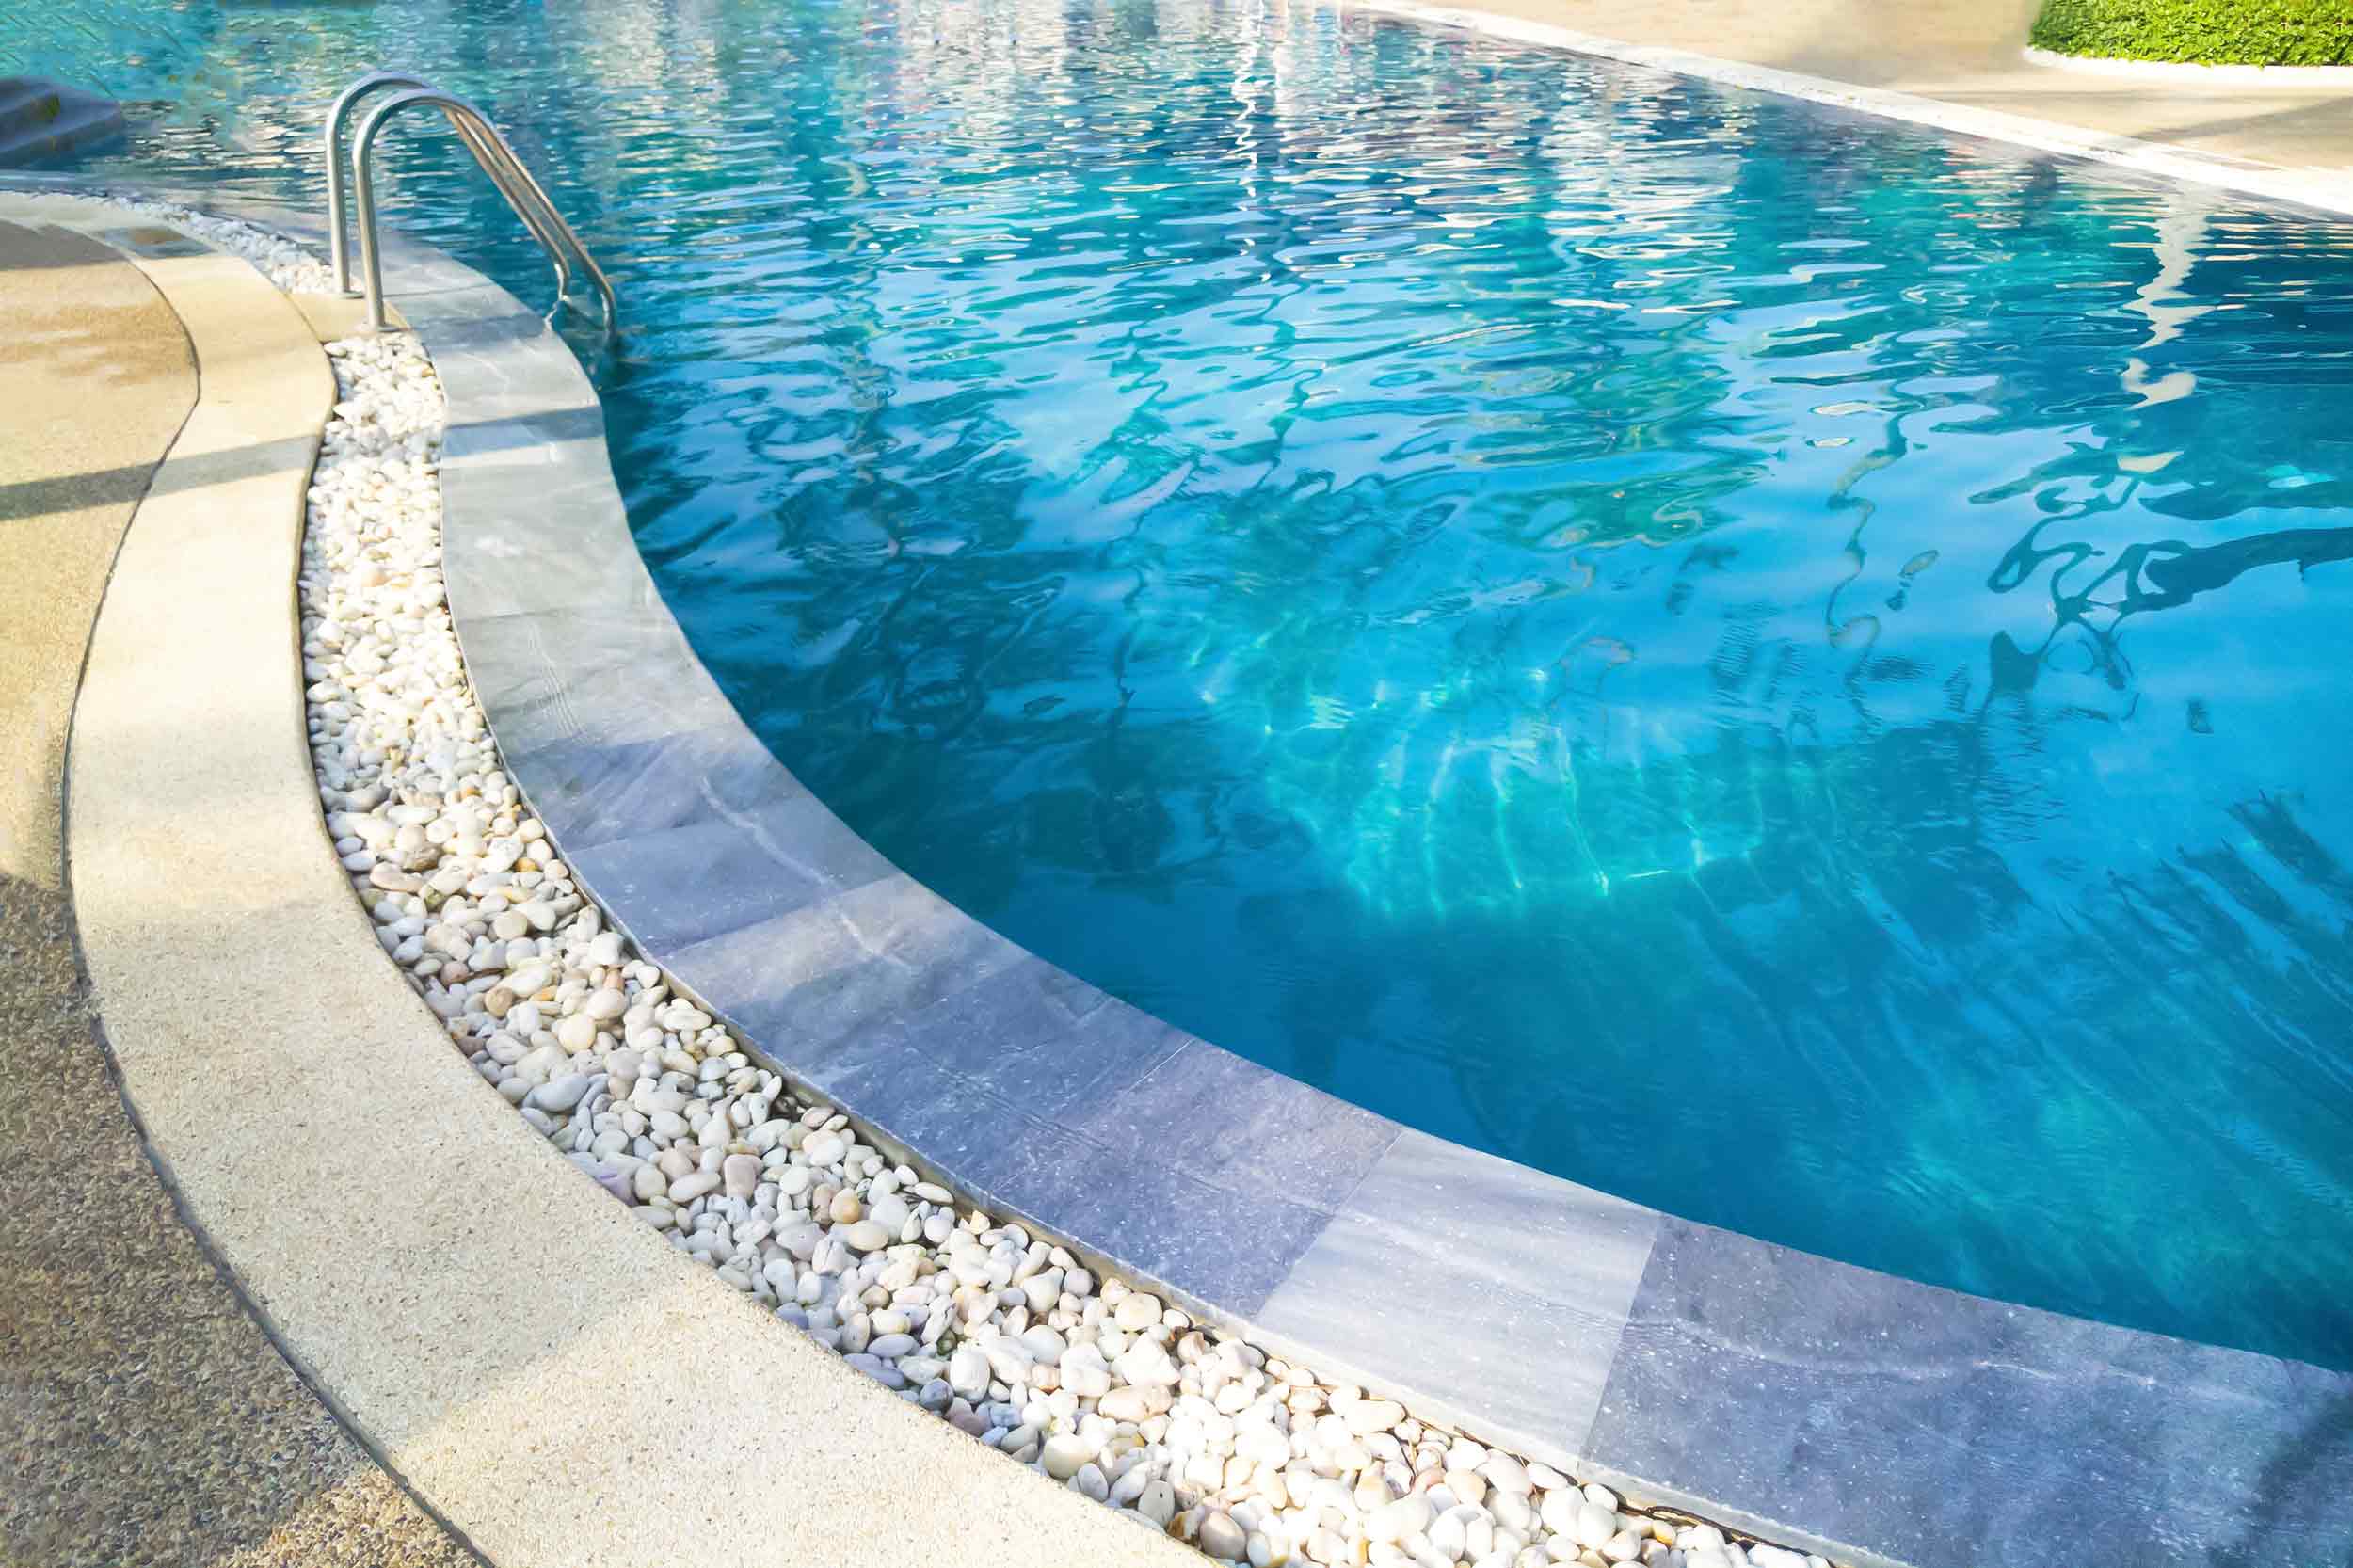 Pool Decking - Paver decking with landscaping rock.